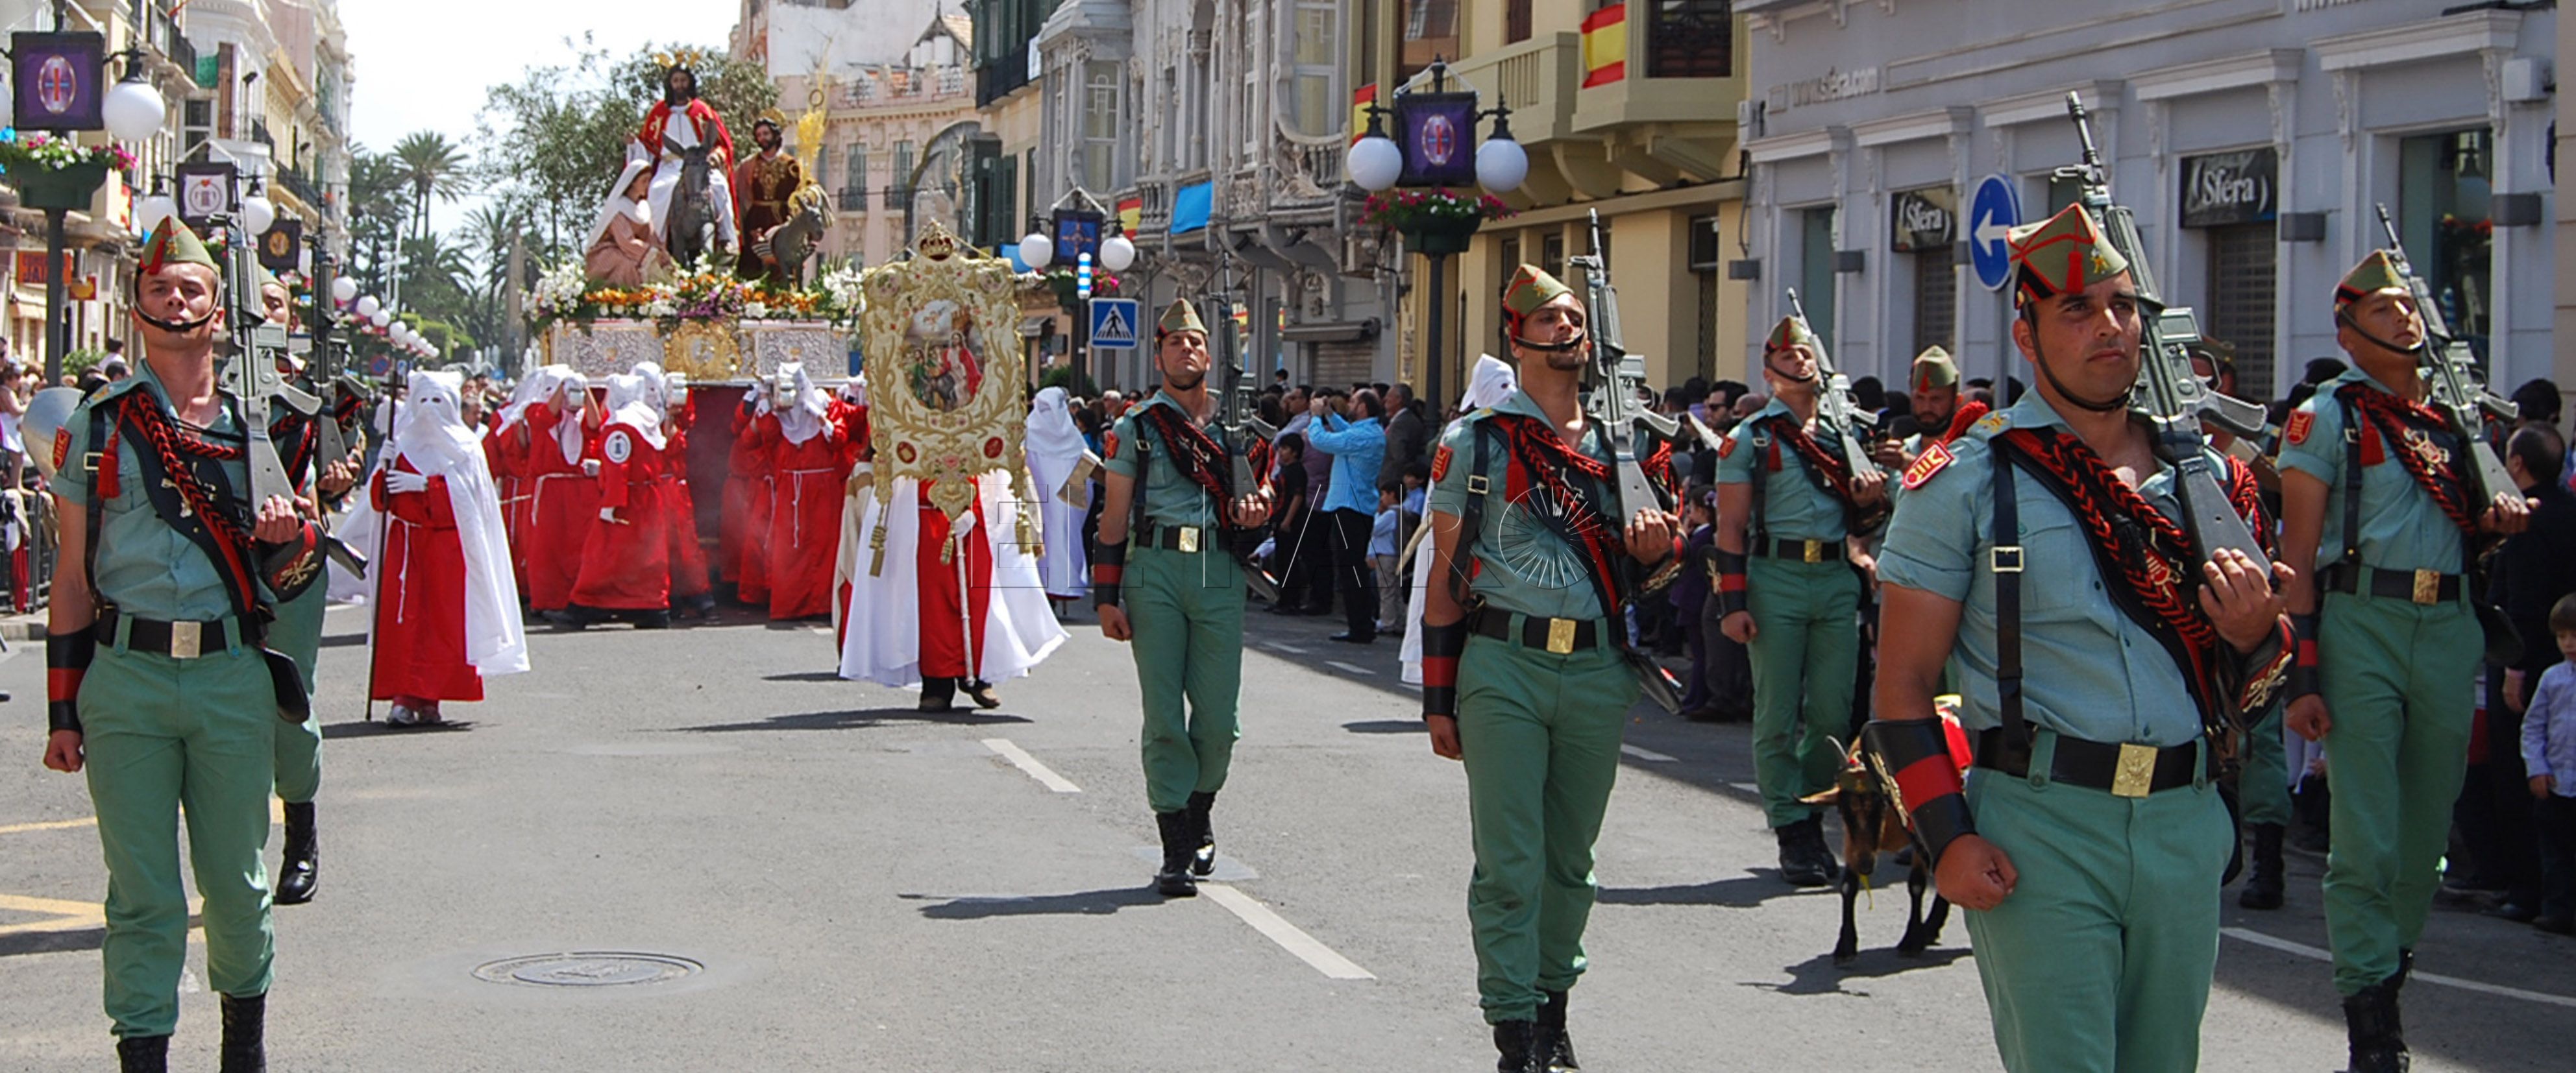 Veterano miembro de la legión española durante la Semana Santa, la